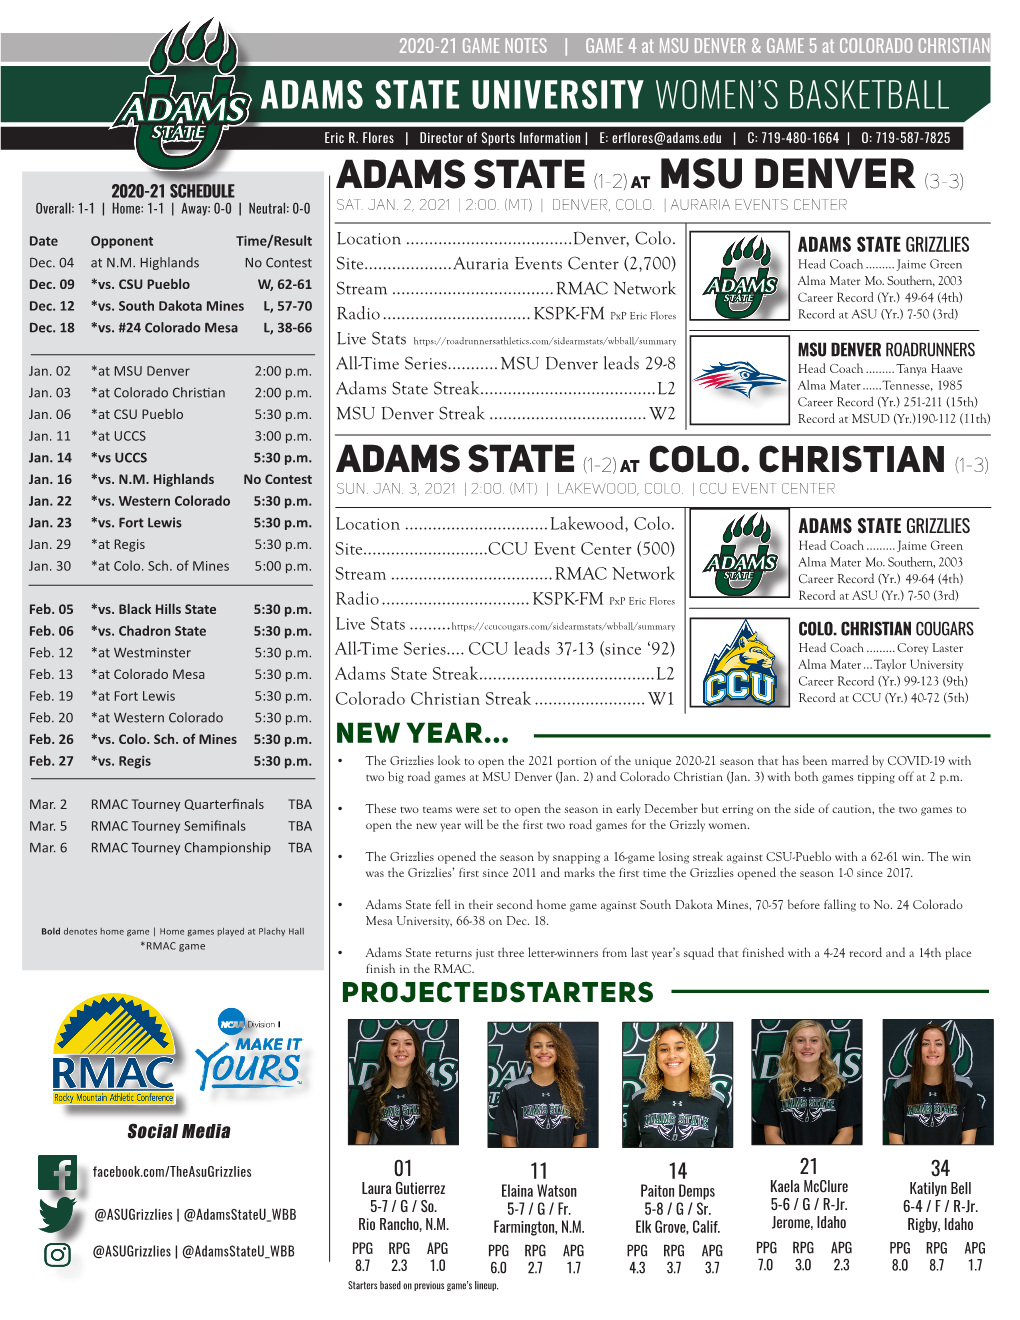 ADAMS STATE (1-2)At MSU Denver (3-3)